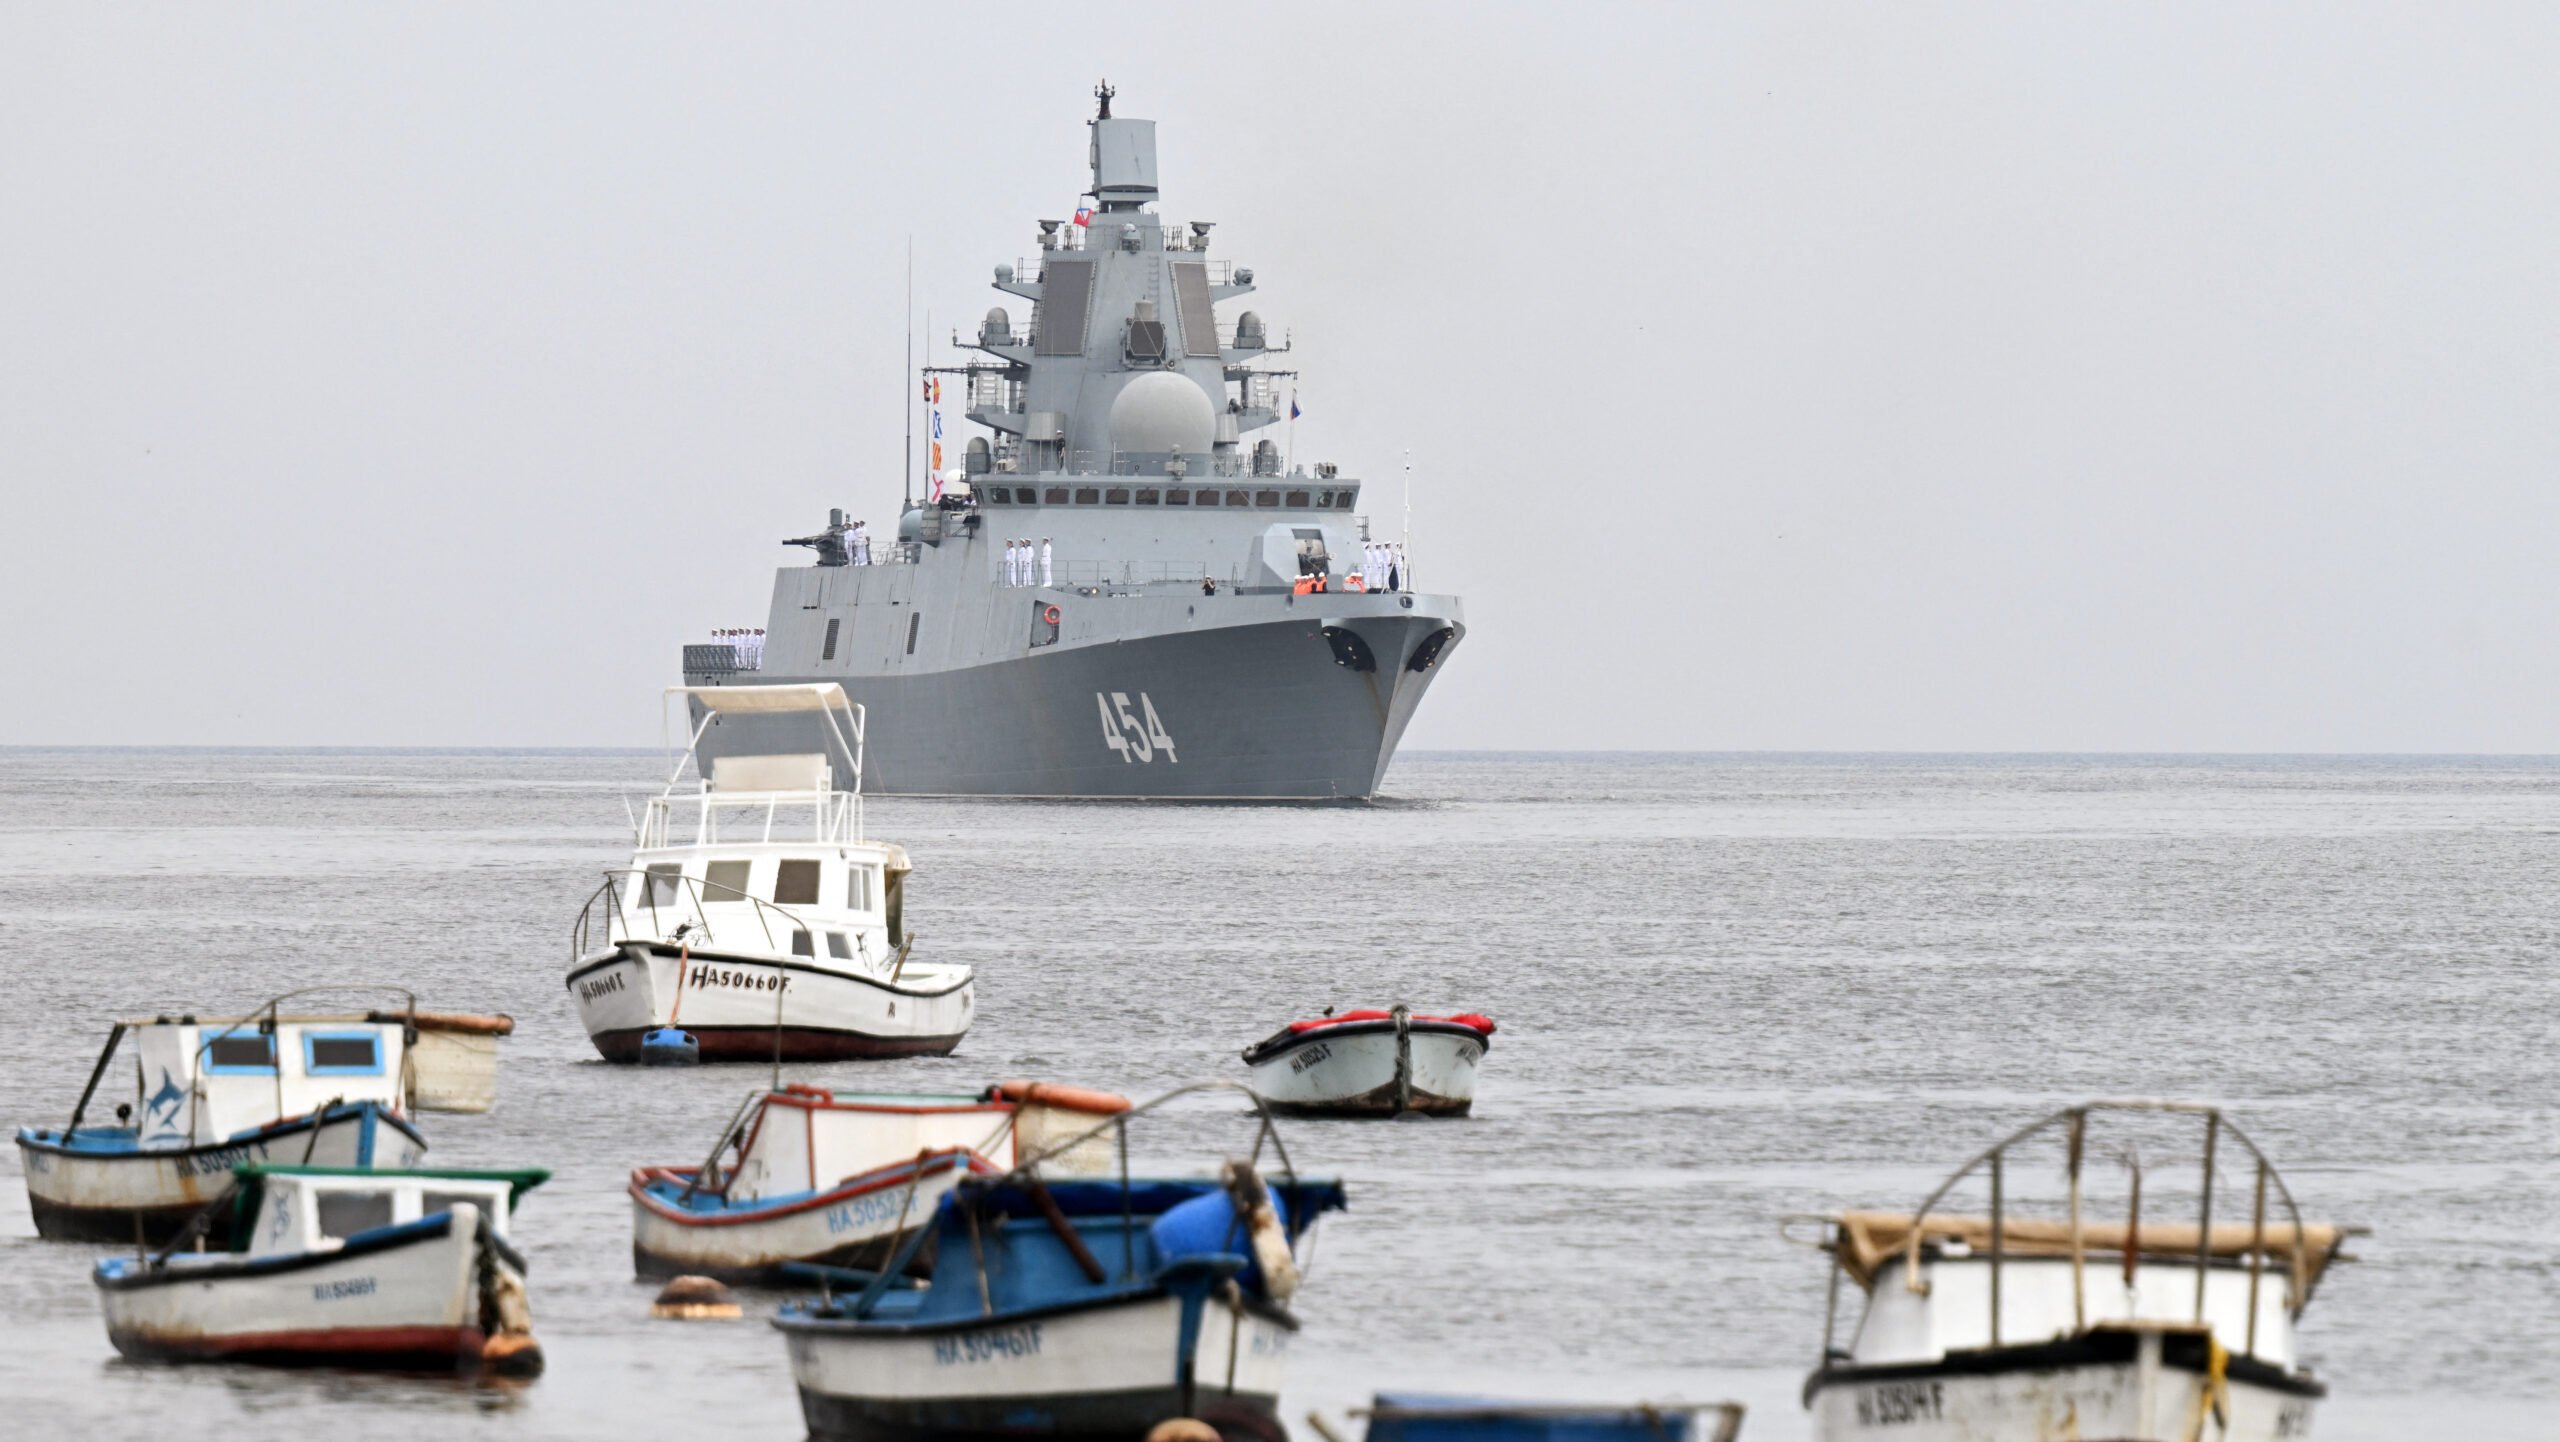 Russian warships visit Cuba, sending a message to Washington: Analysts